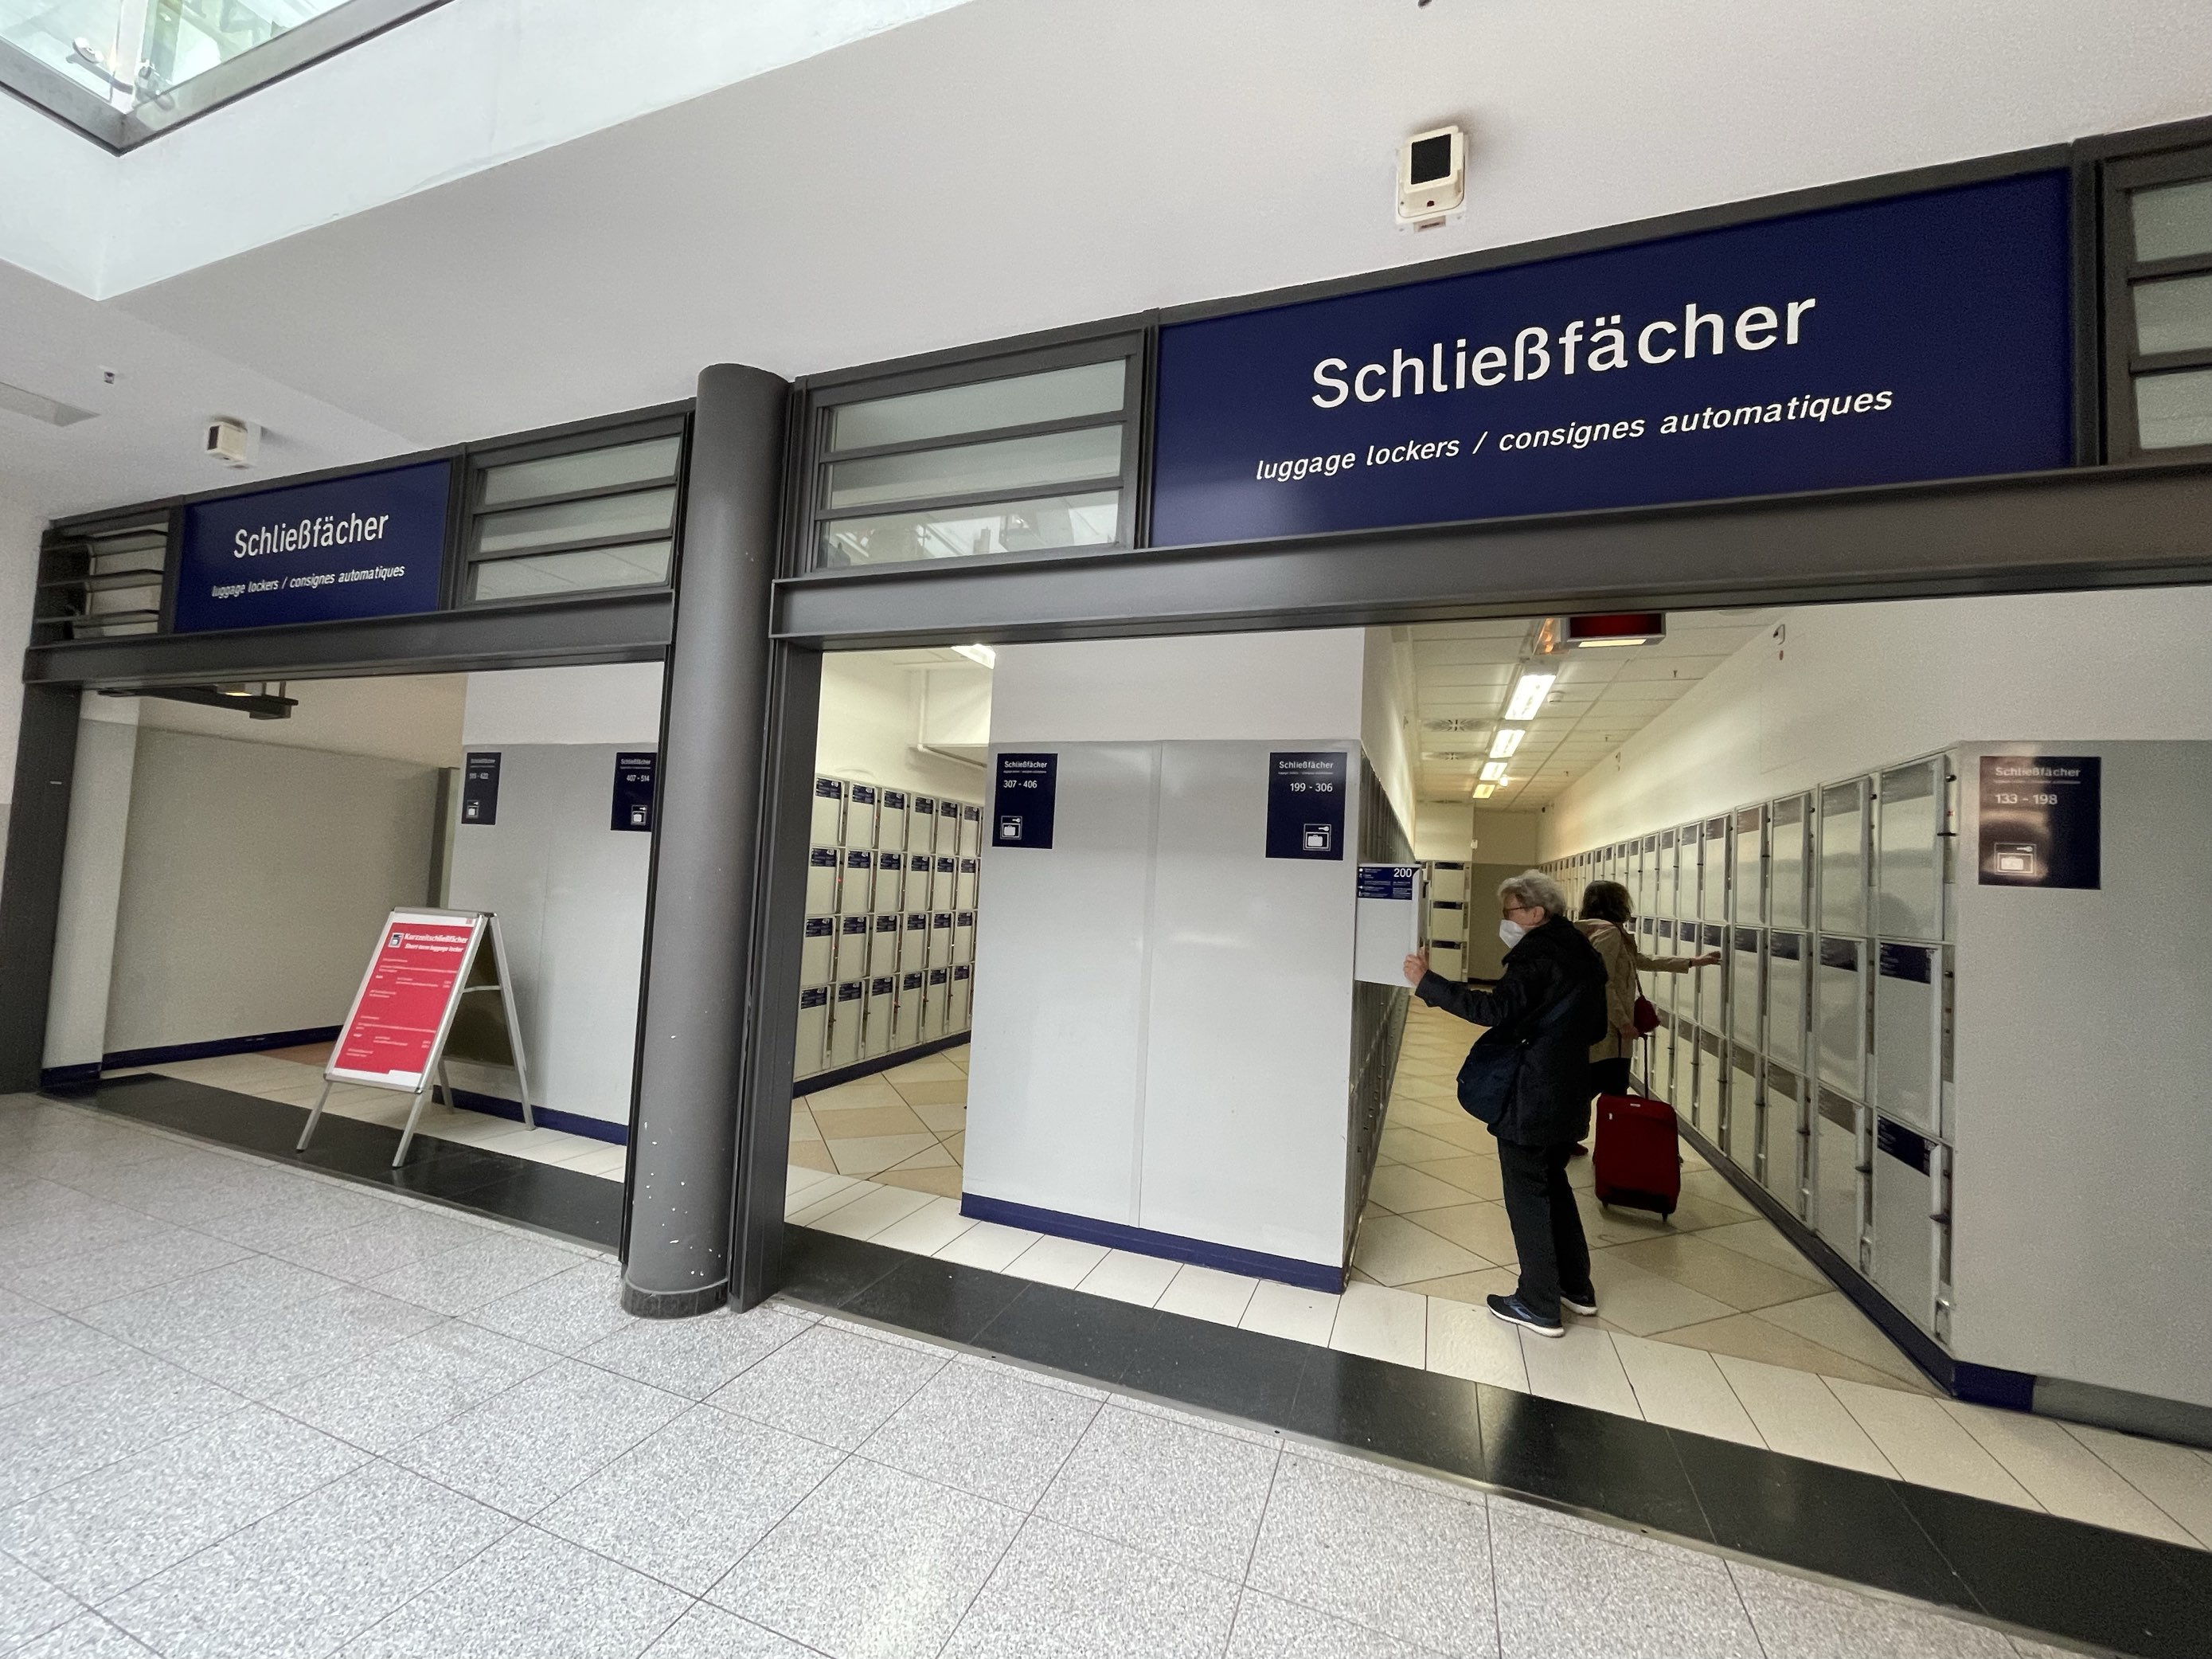 Baggage Storage @ schließfächer | Trip.com Nuremberg